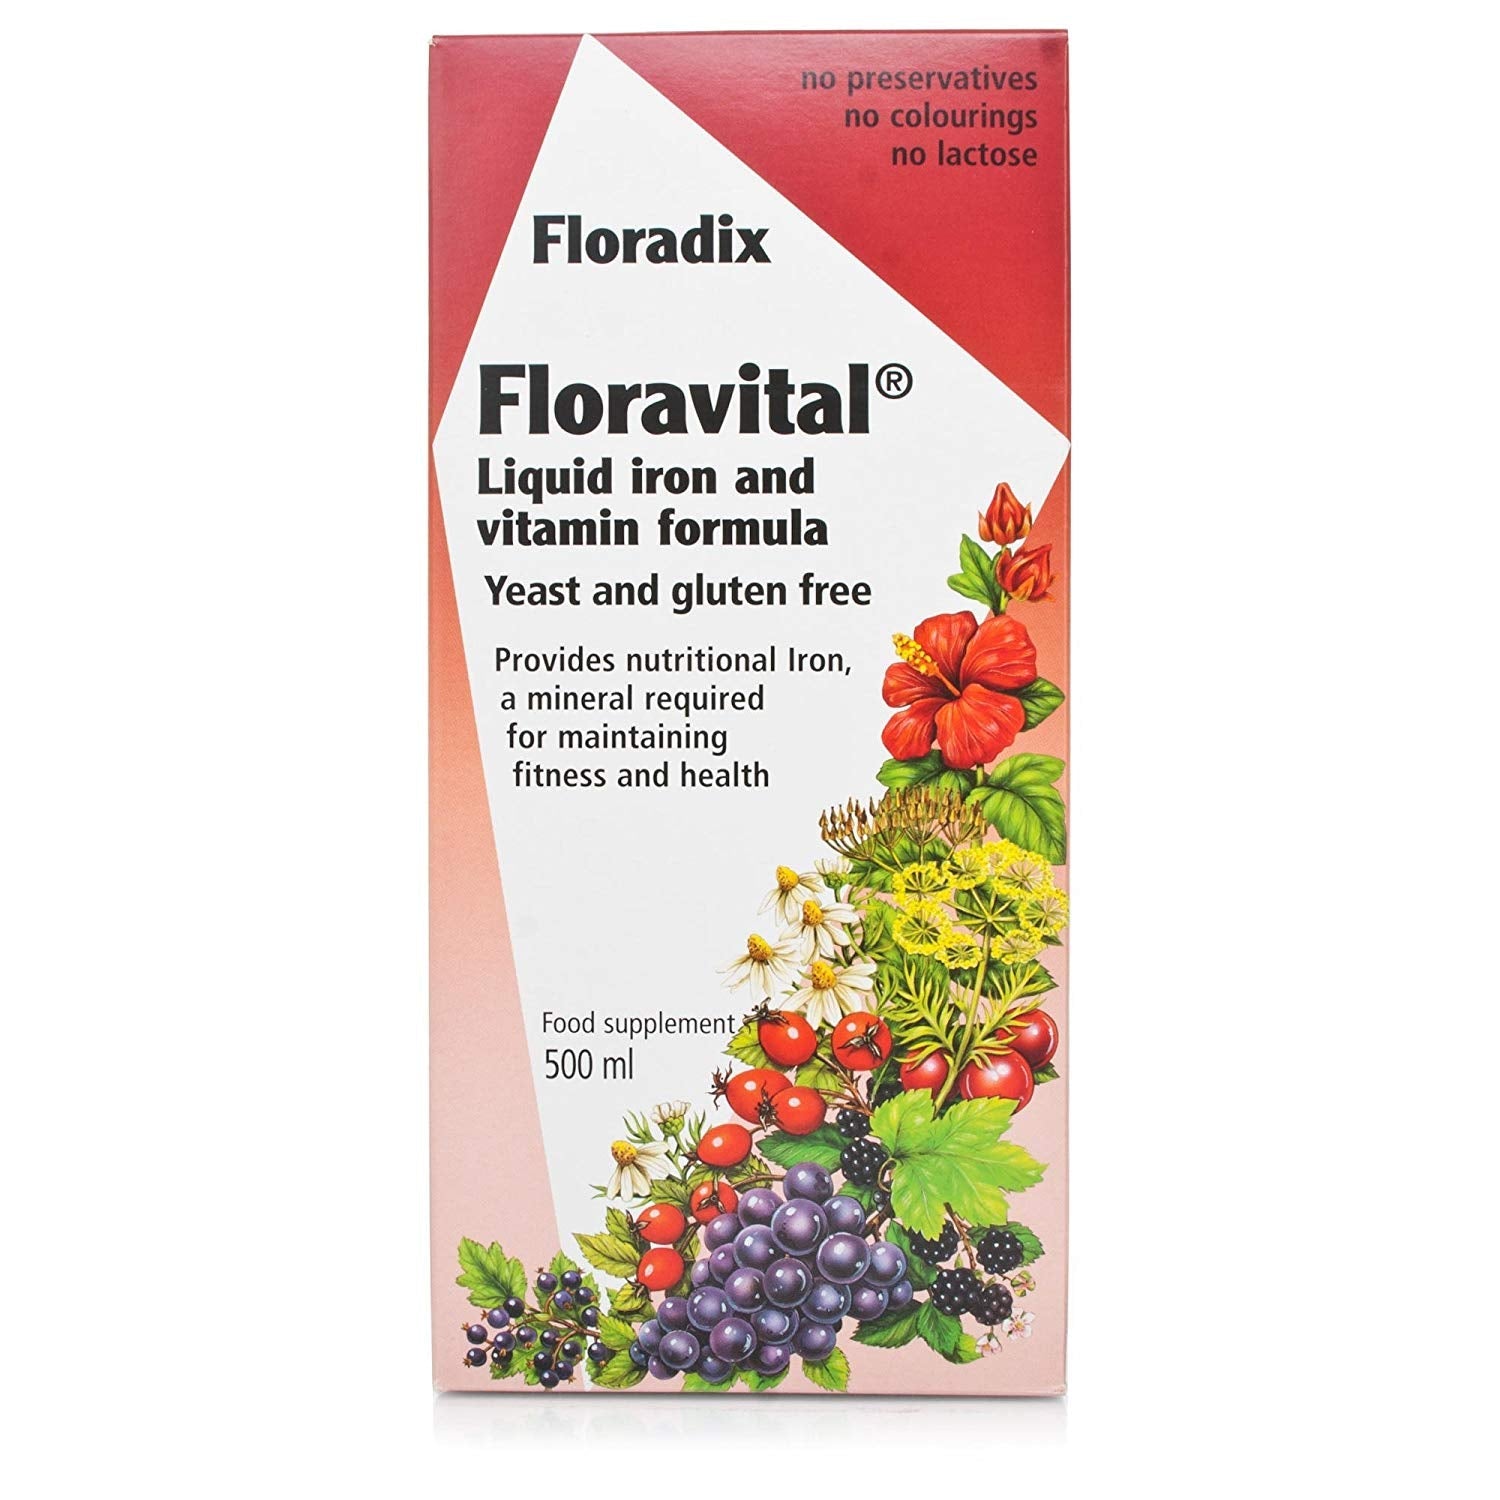 Floravital Yeast & gluten free liquid iron formula Just Natural